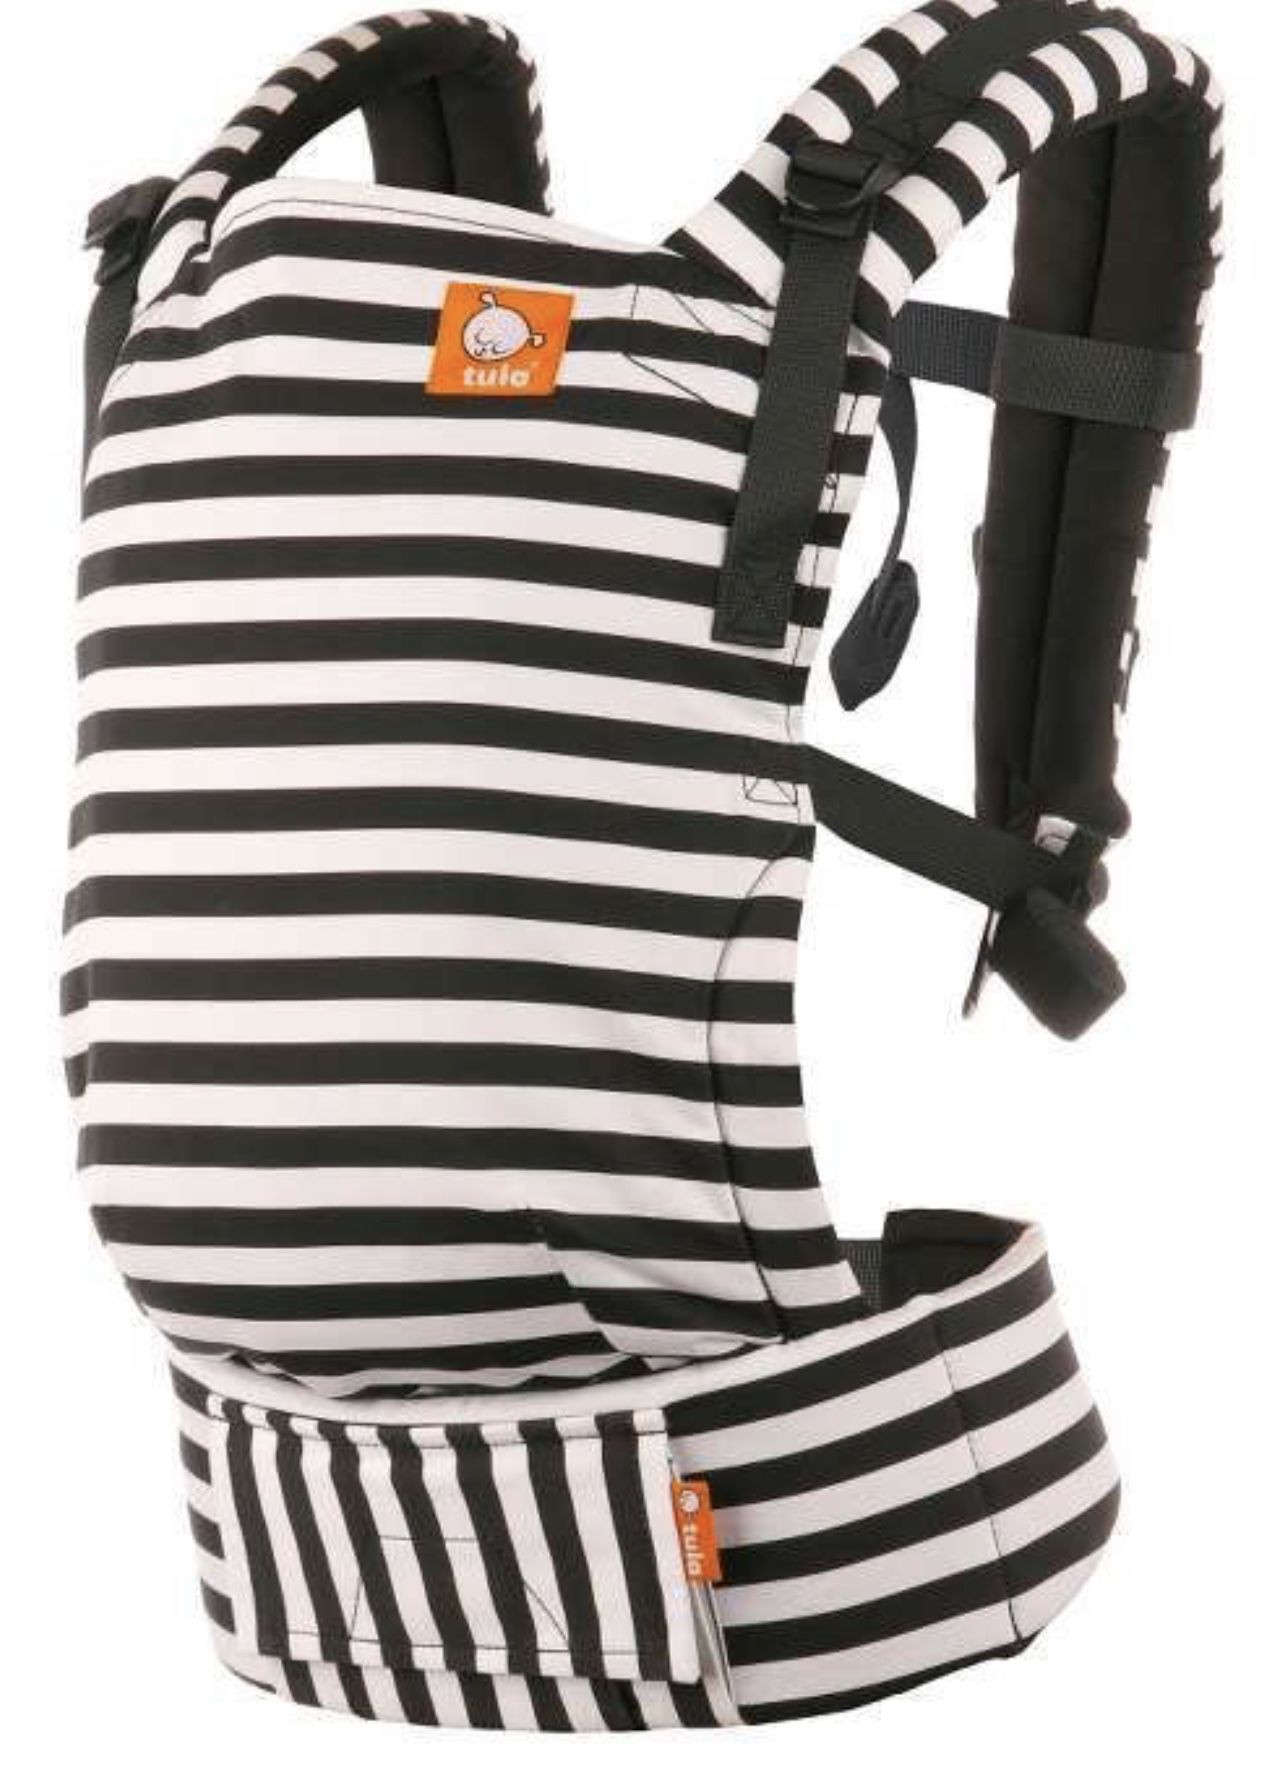 Baby Tula Carrier Black White Stripes